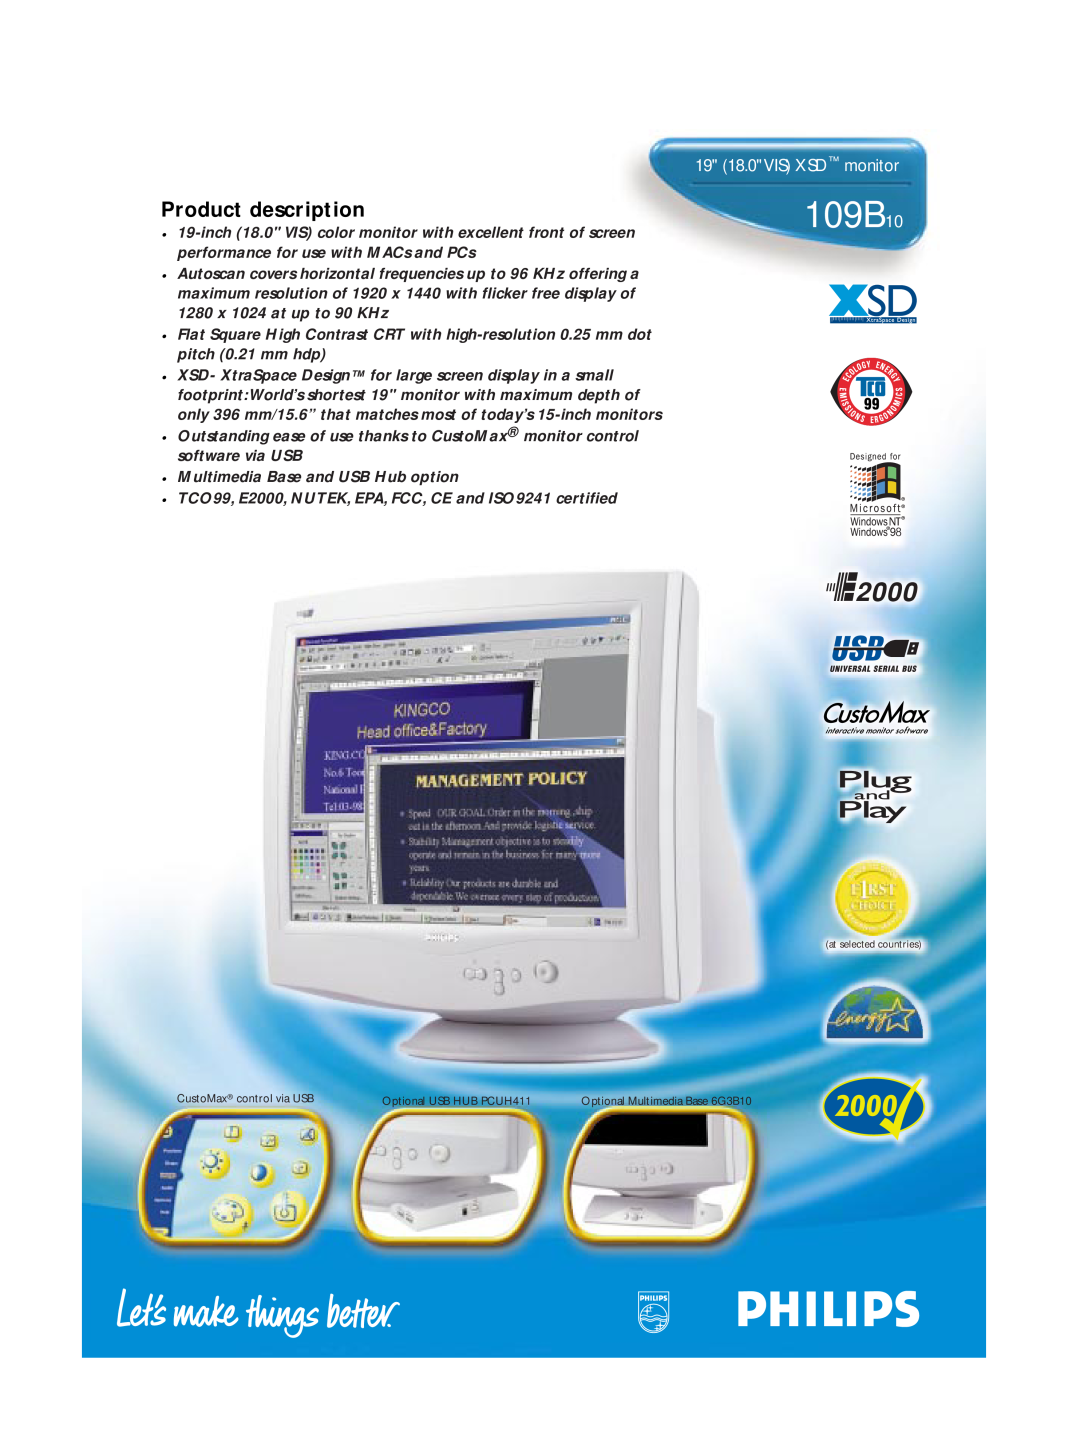 Philips 109B10 manual Product description, 19 18.0VIS XSD monitor 